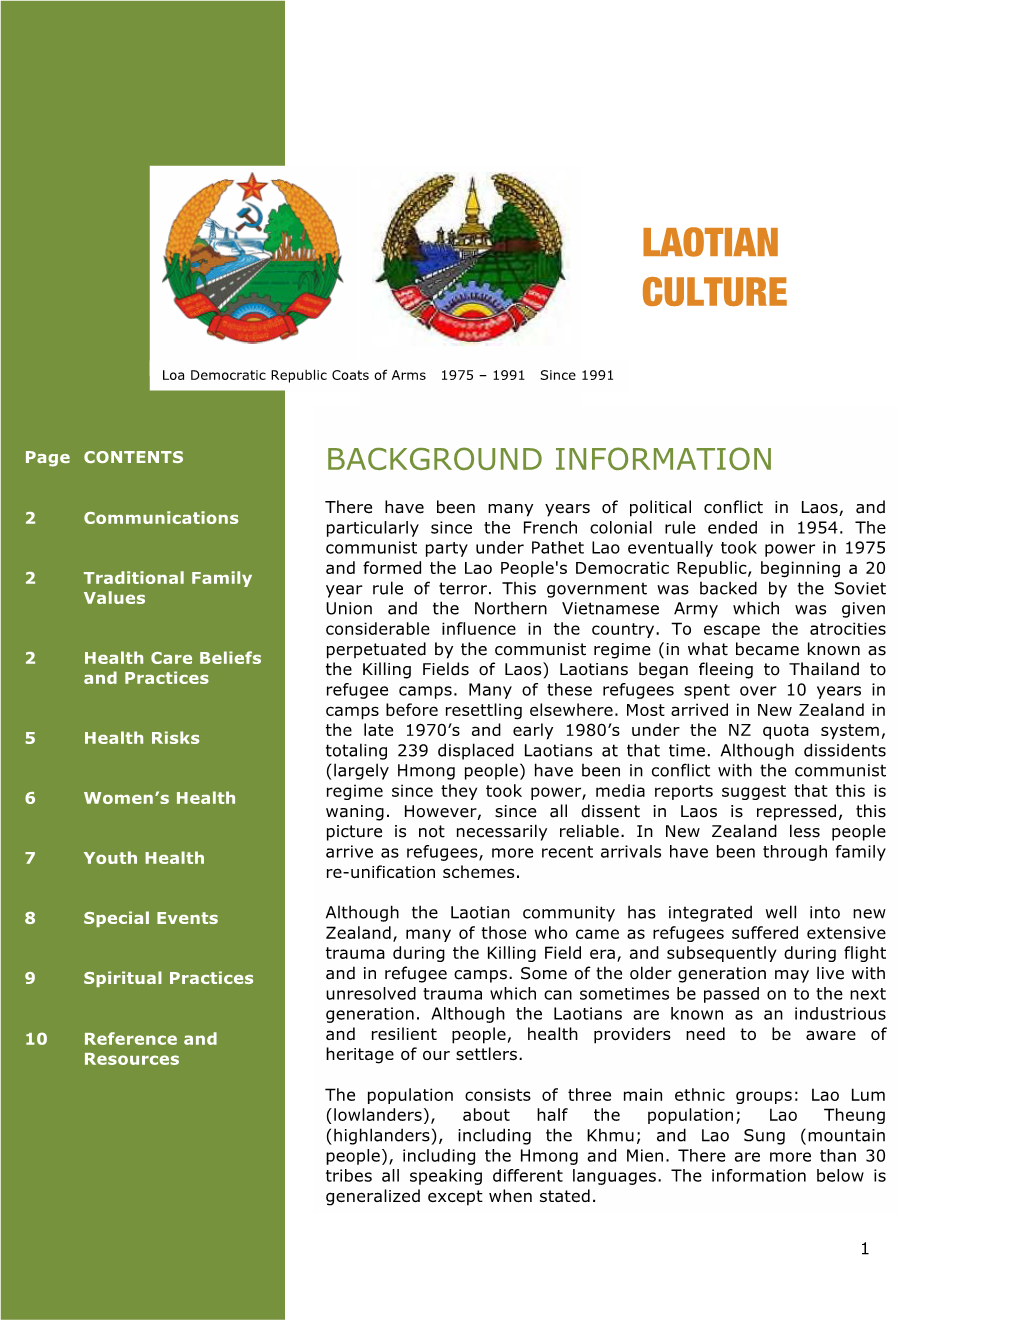 Laotian Culture